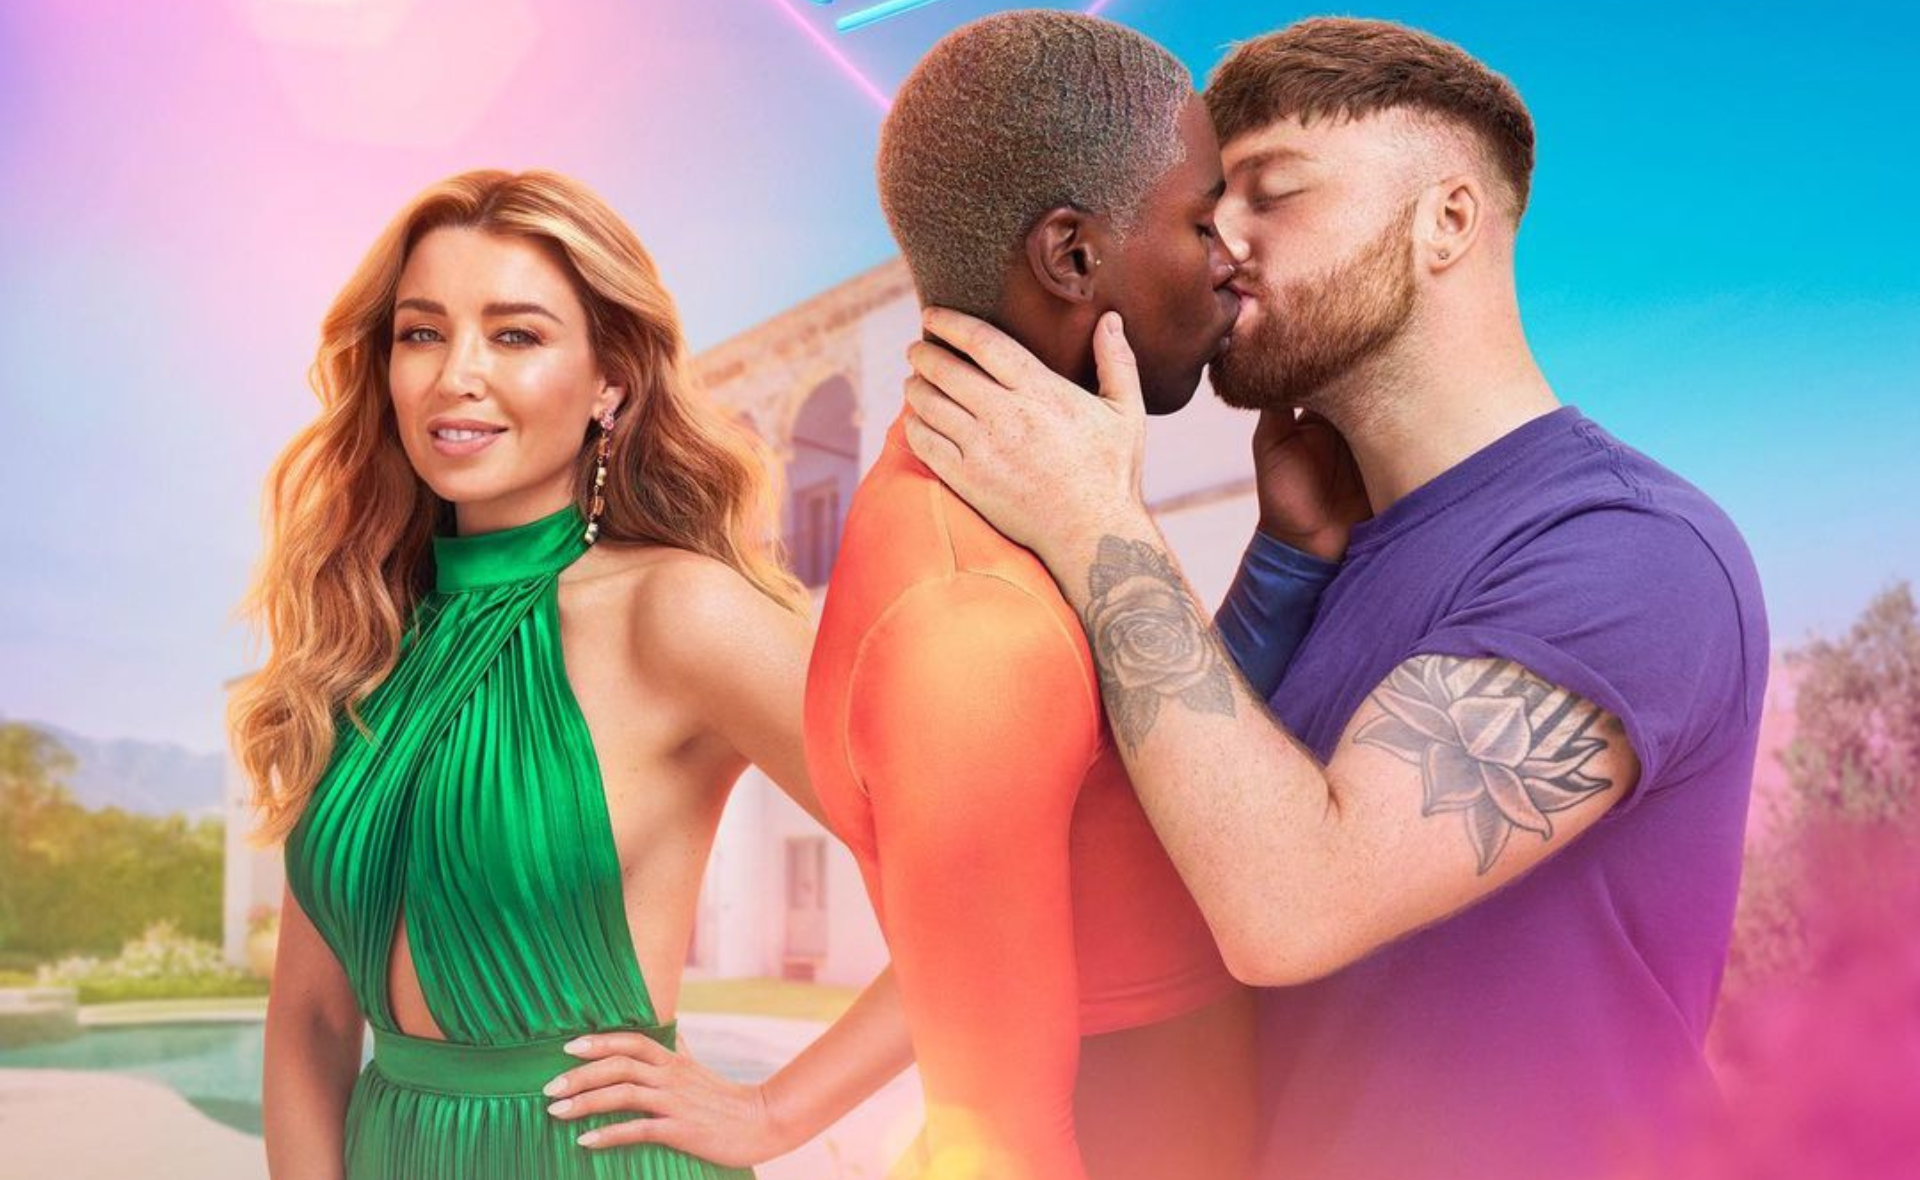 Dannii Minogue to host groundbreaking same sex dating show